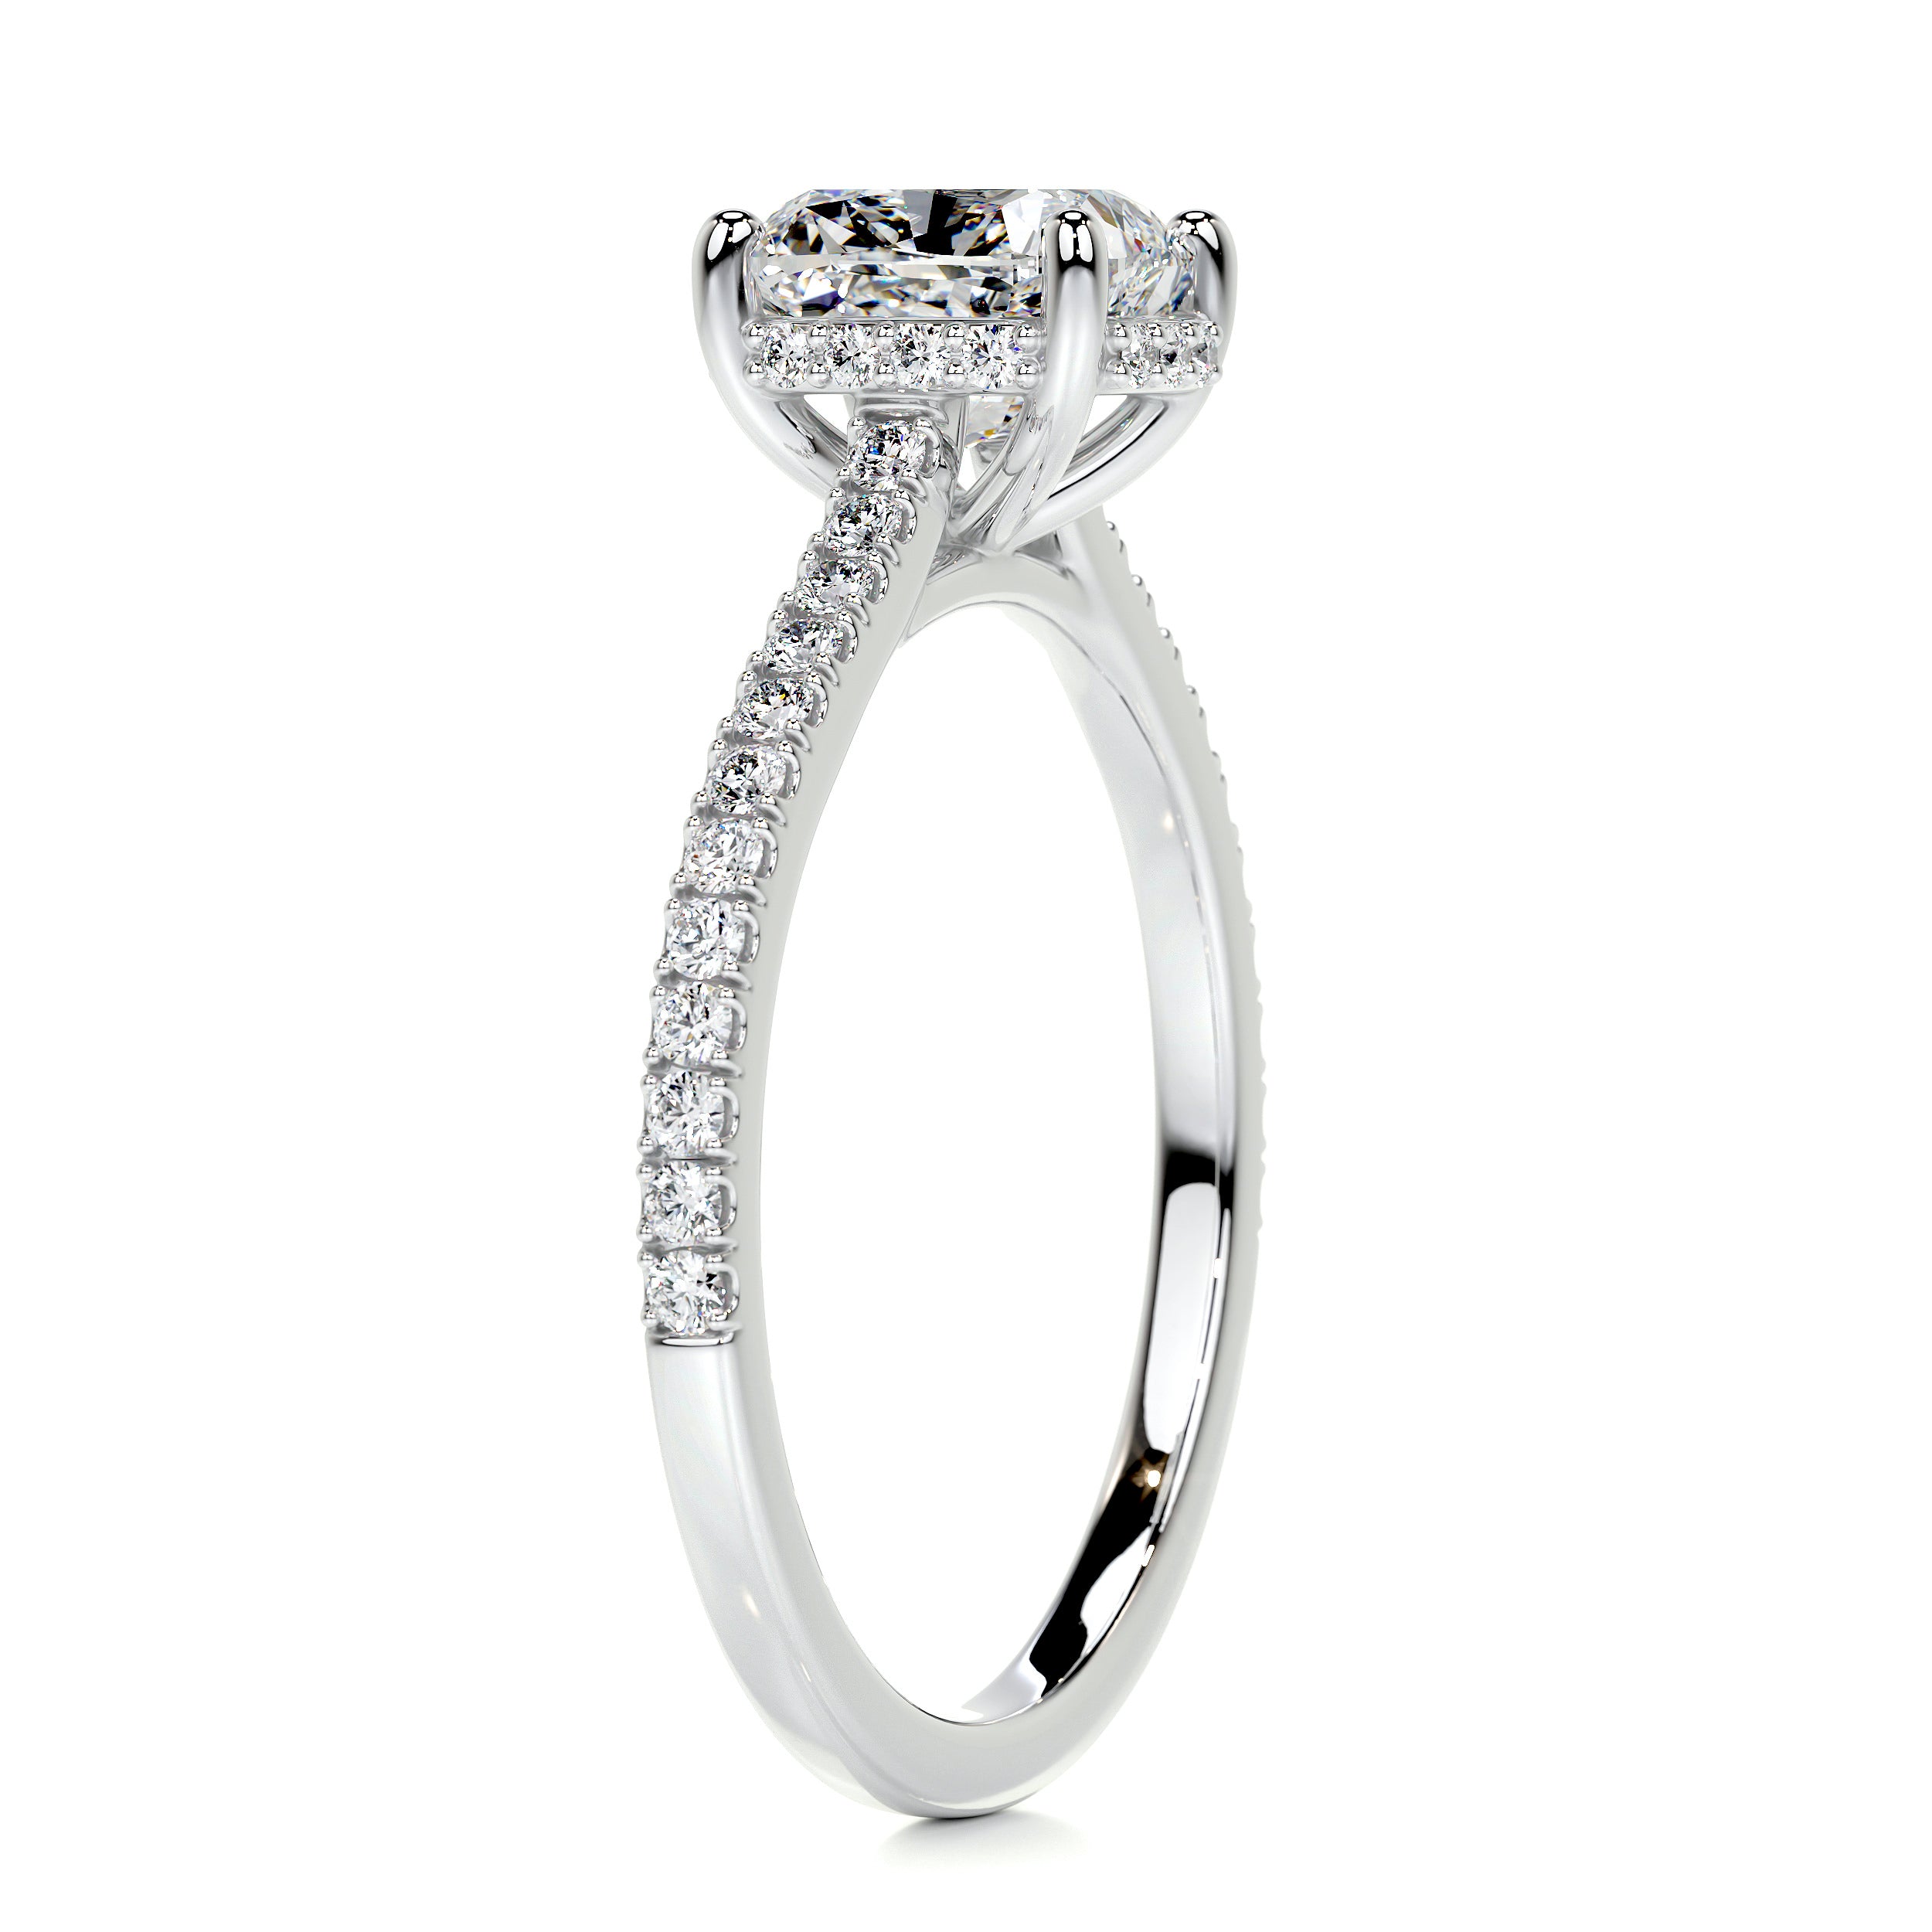 Deandra Diamond Engagement Ring   (1.75 Carat) -14K White Gold